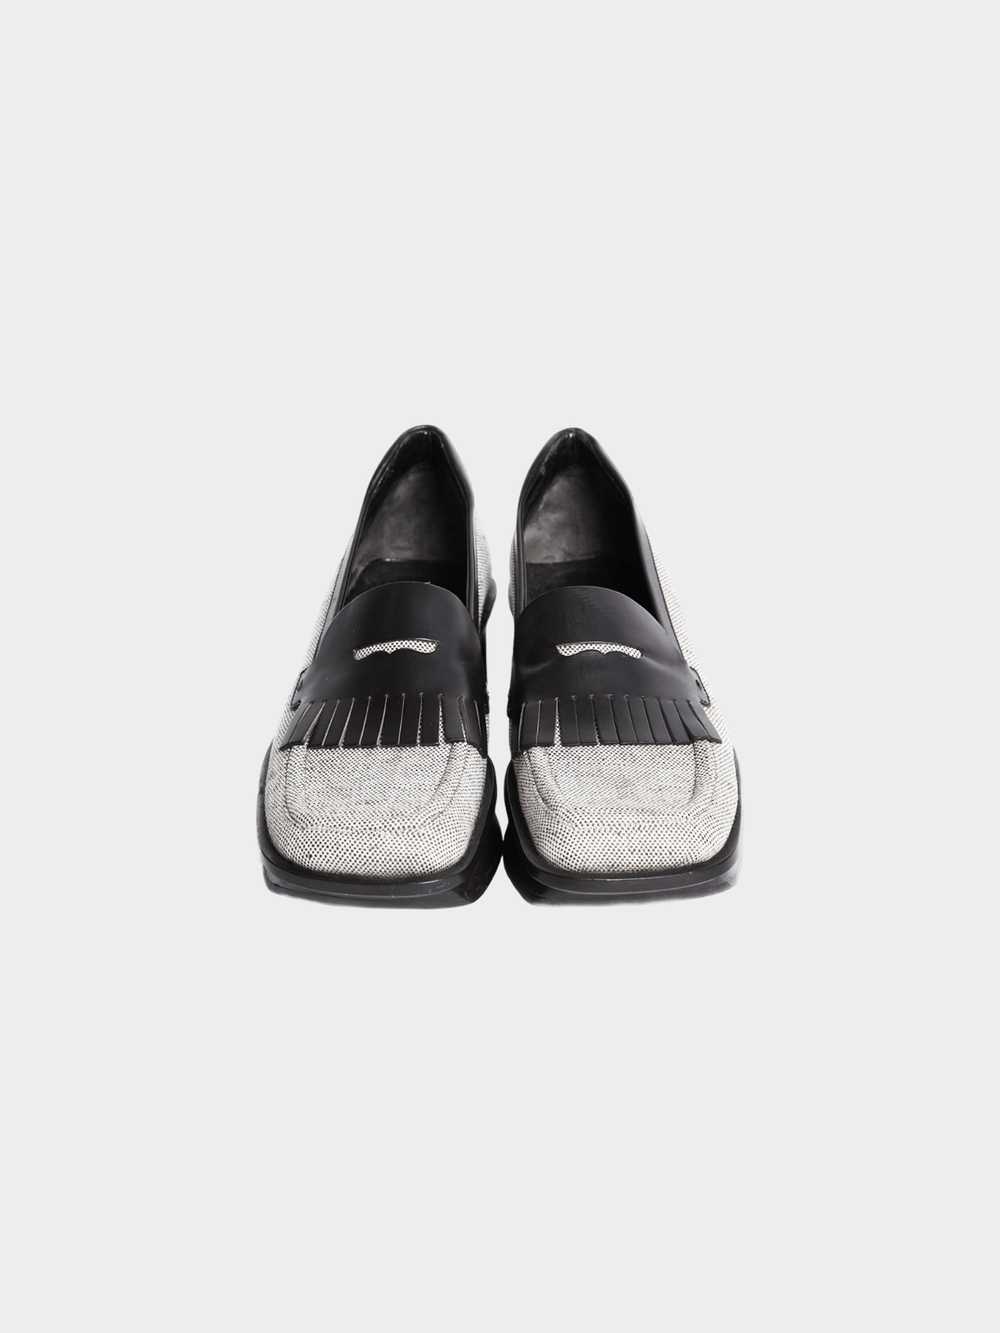 Prada SS 1999 Black and Grey Platform Loafers - image 3